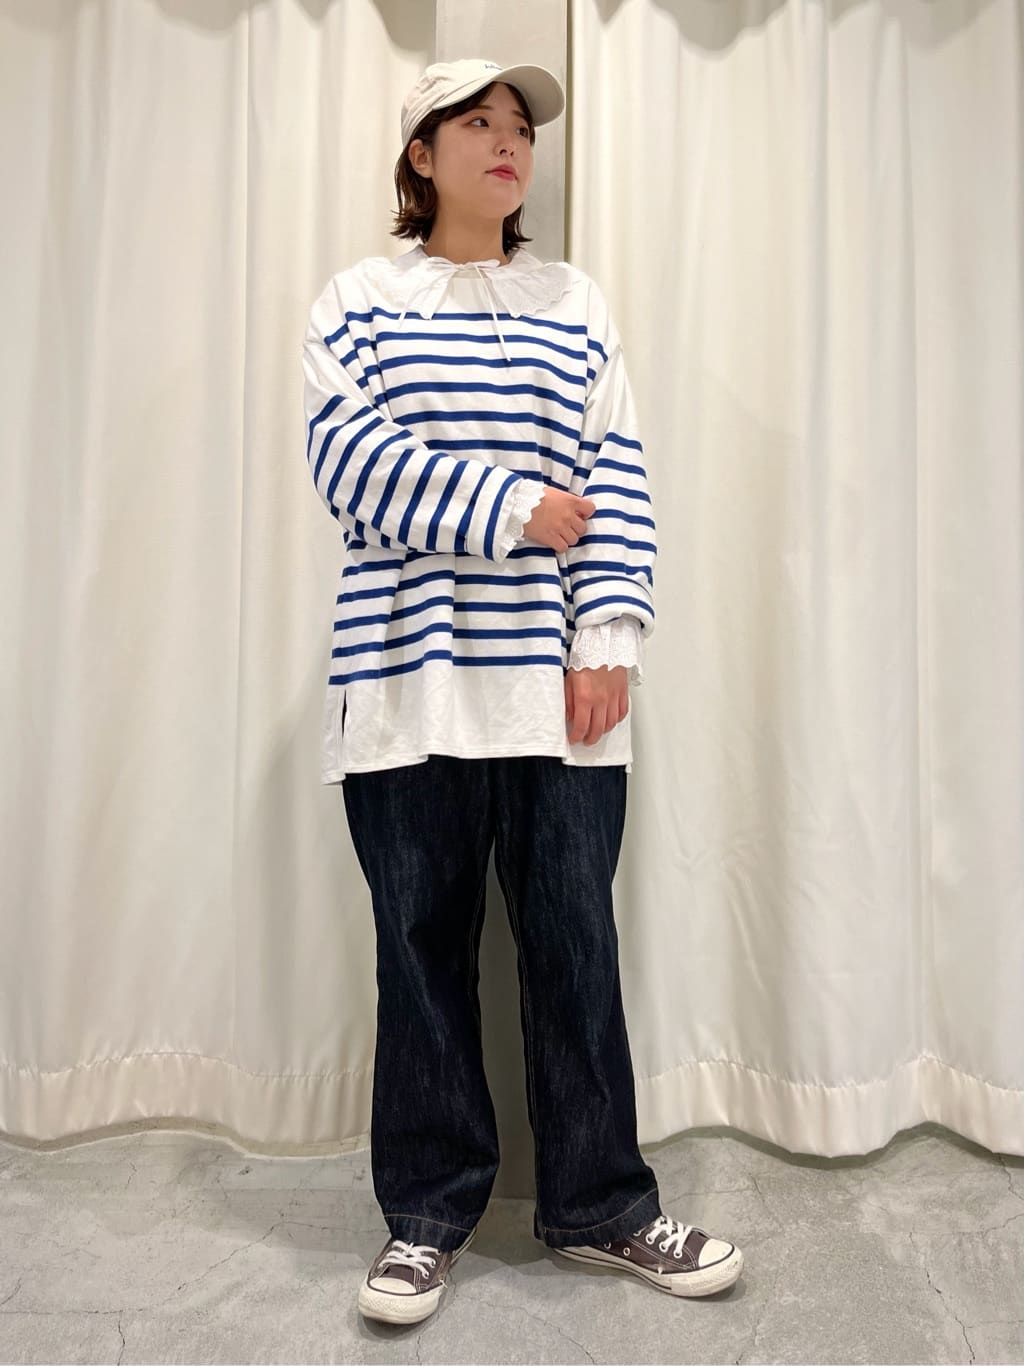 Dot and Stripes CHILD WOMAN CHILD WOMAN , PAR ICI 新宿ミロード 身長：160cm 2022.04.15